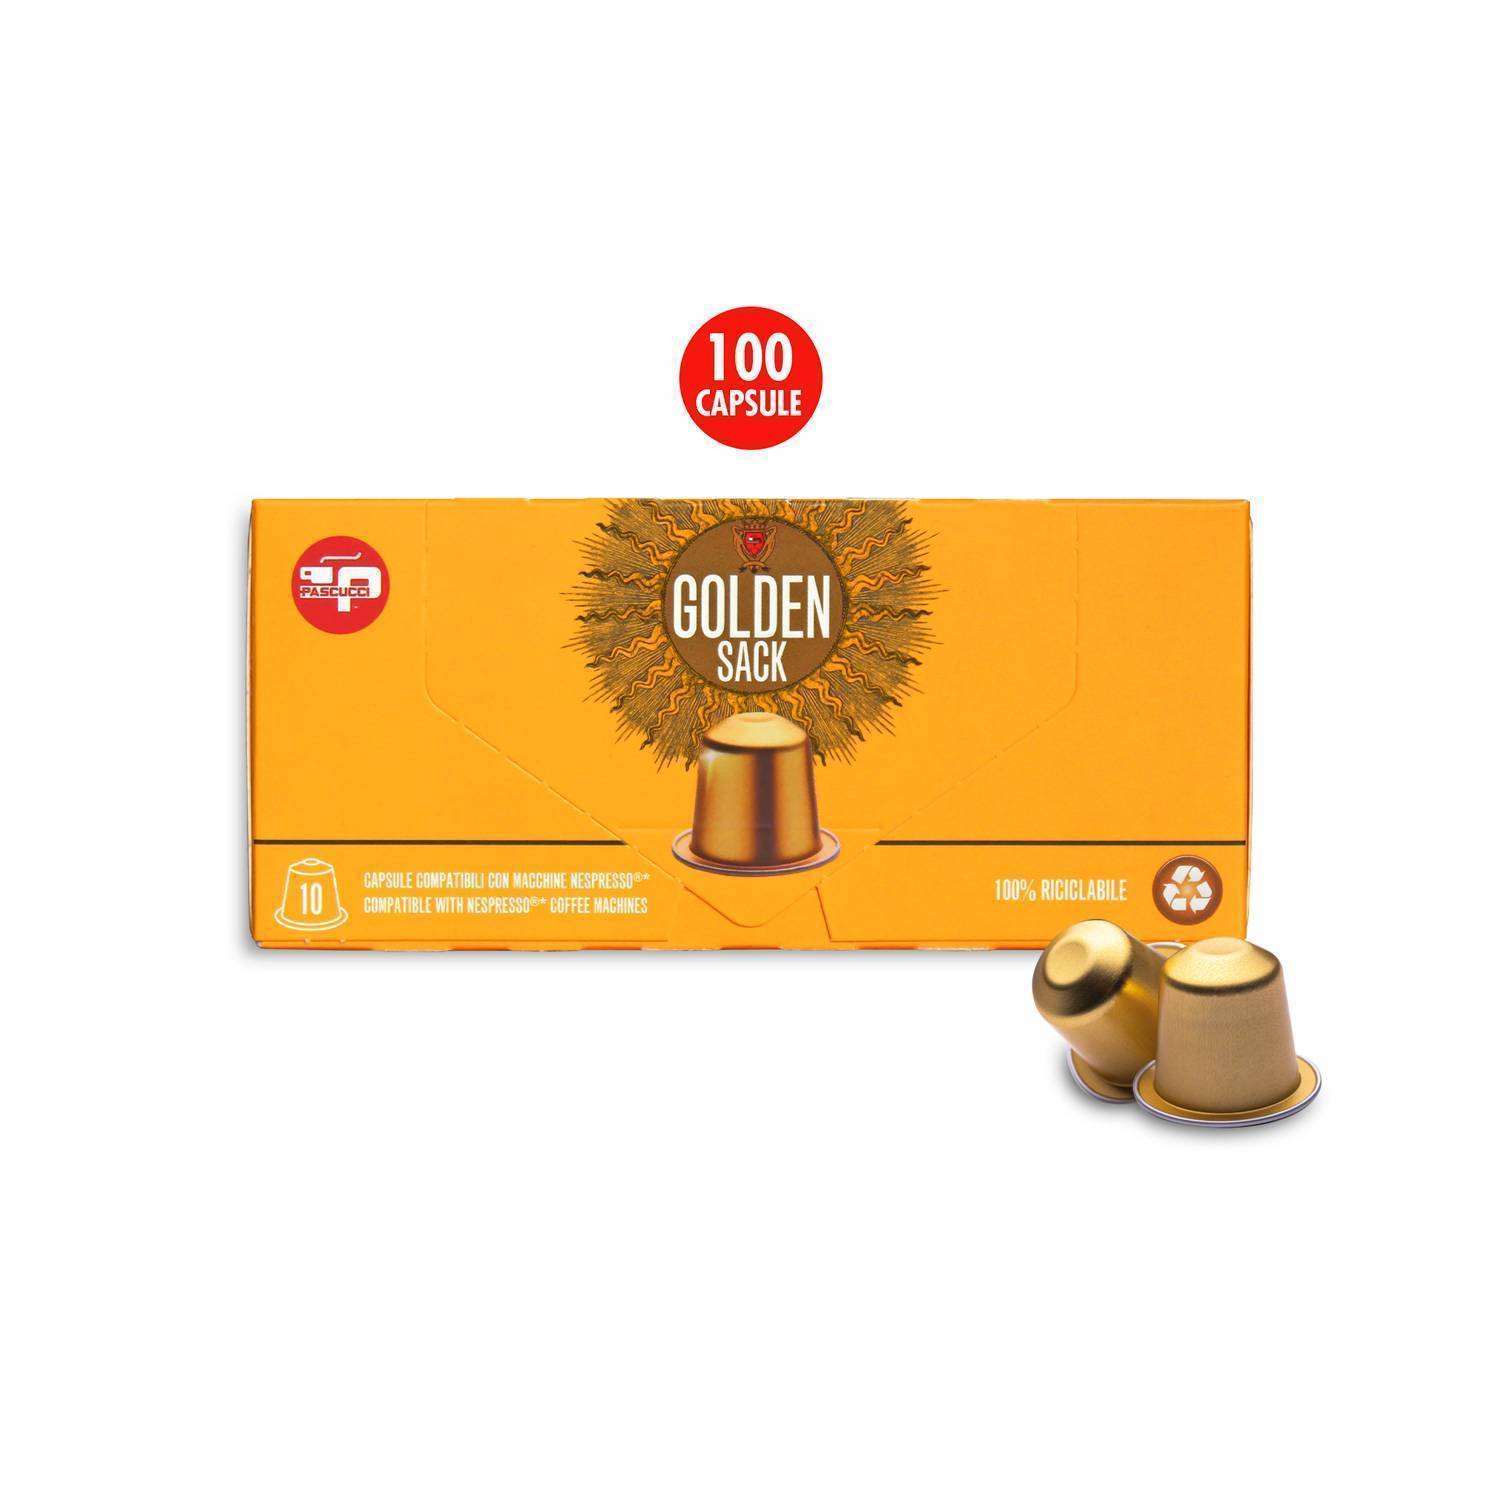 Golden capsule 100 % recyclable aluminum comp. Nespresso 100 pcs